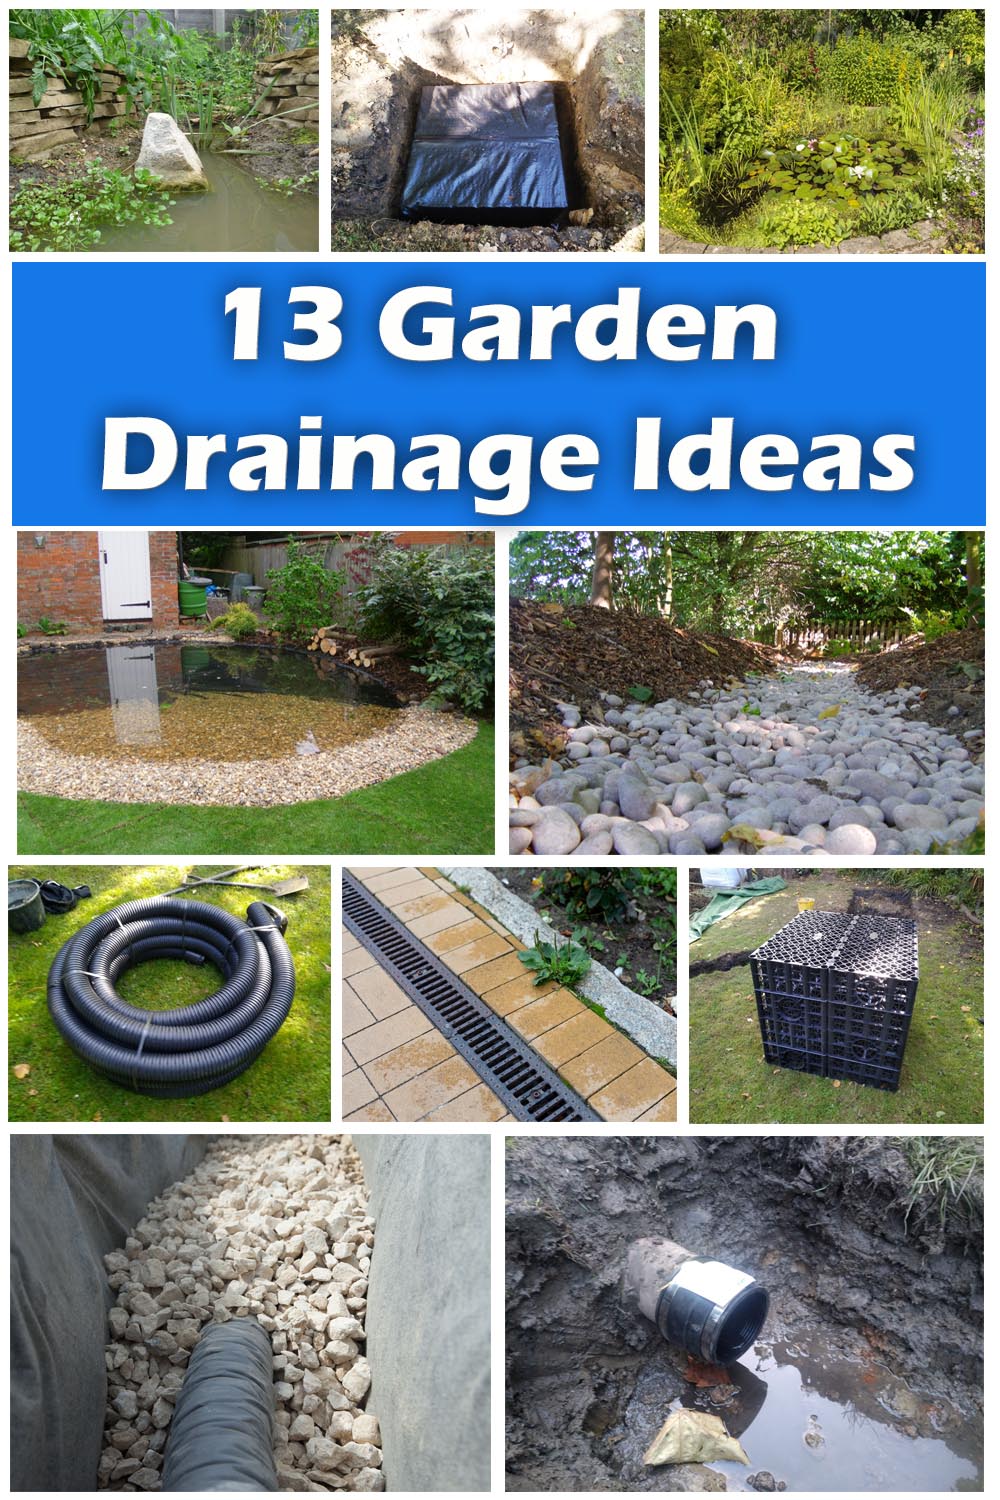 Garden drainage ideas